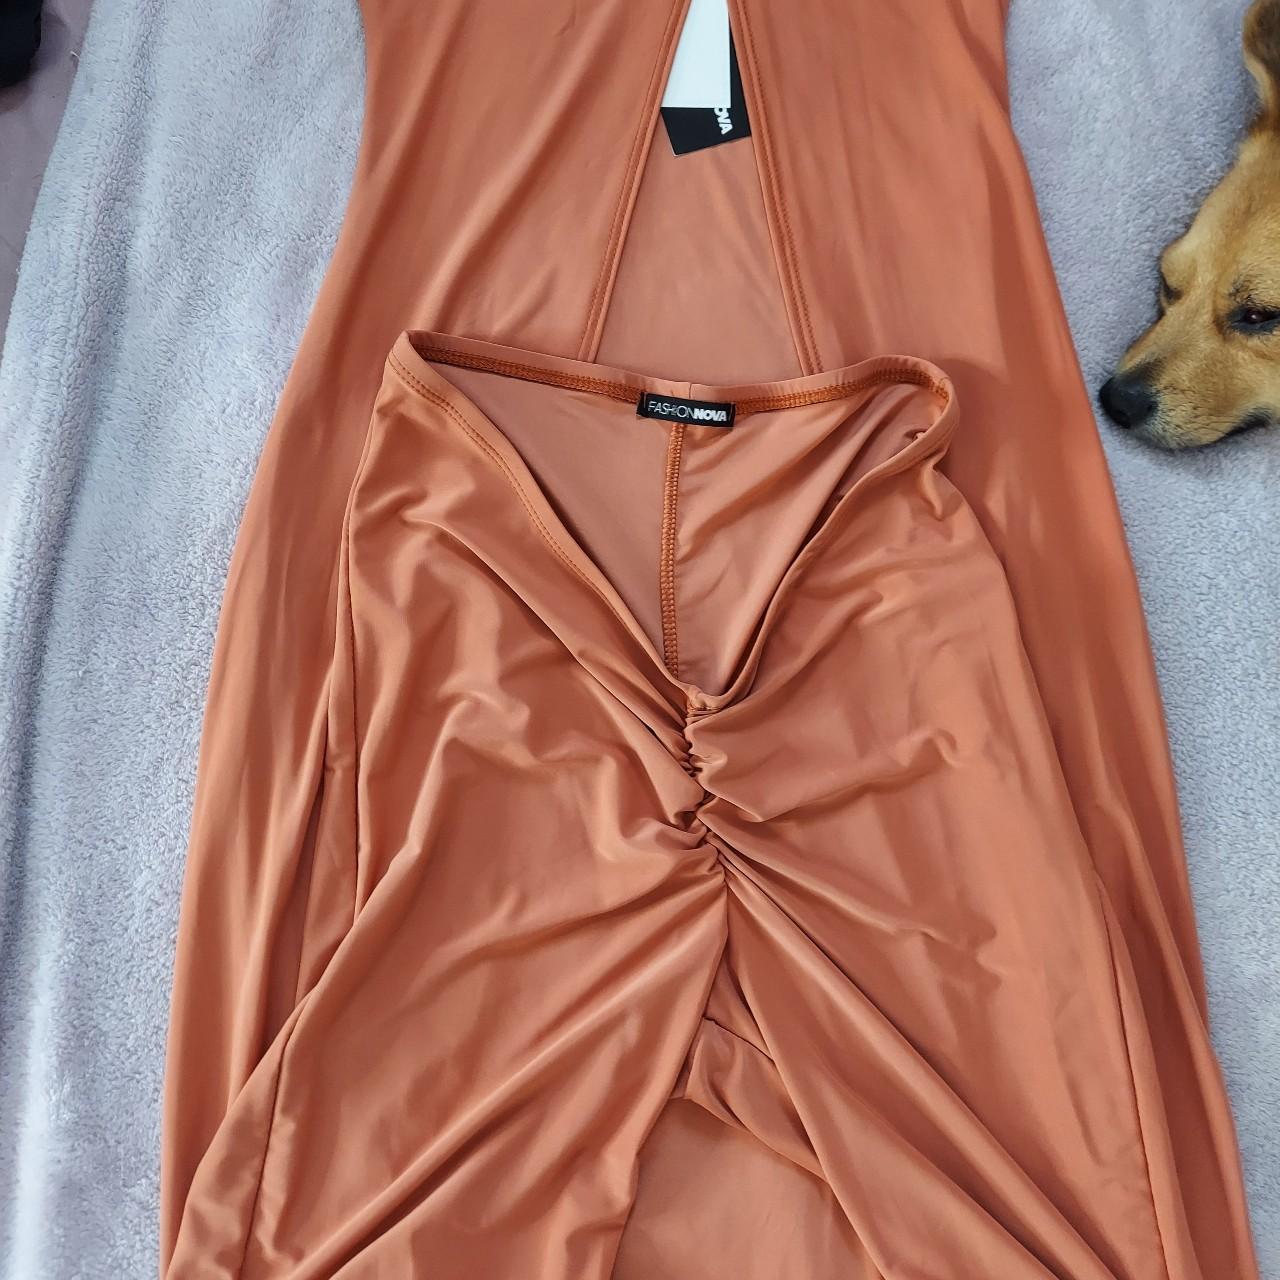 Fashion Nova Women's Orange Suit (2)